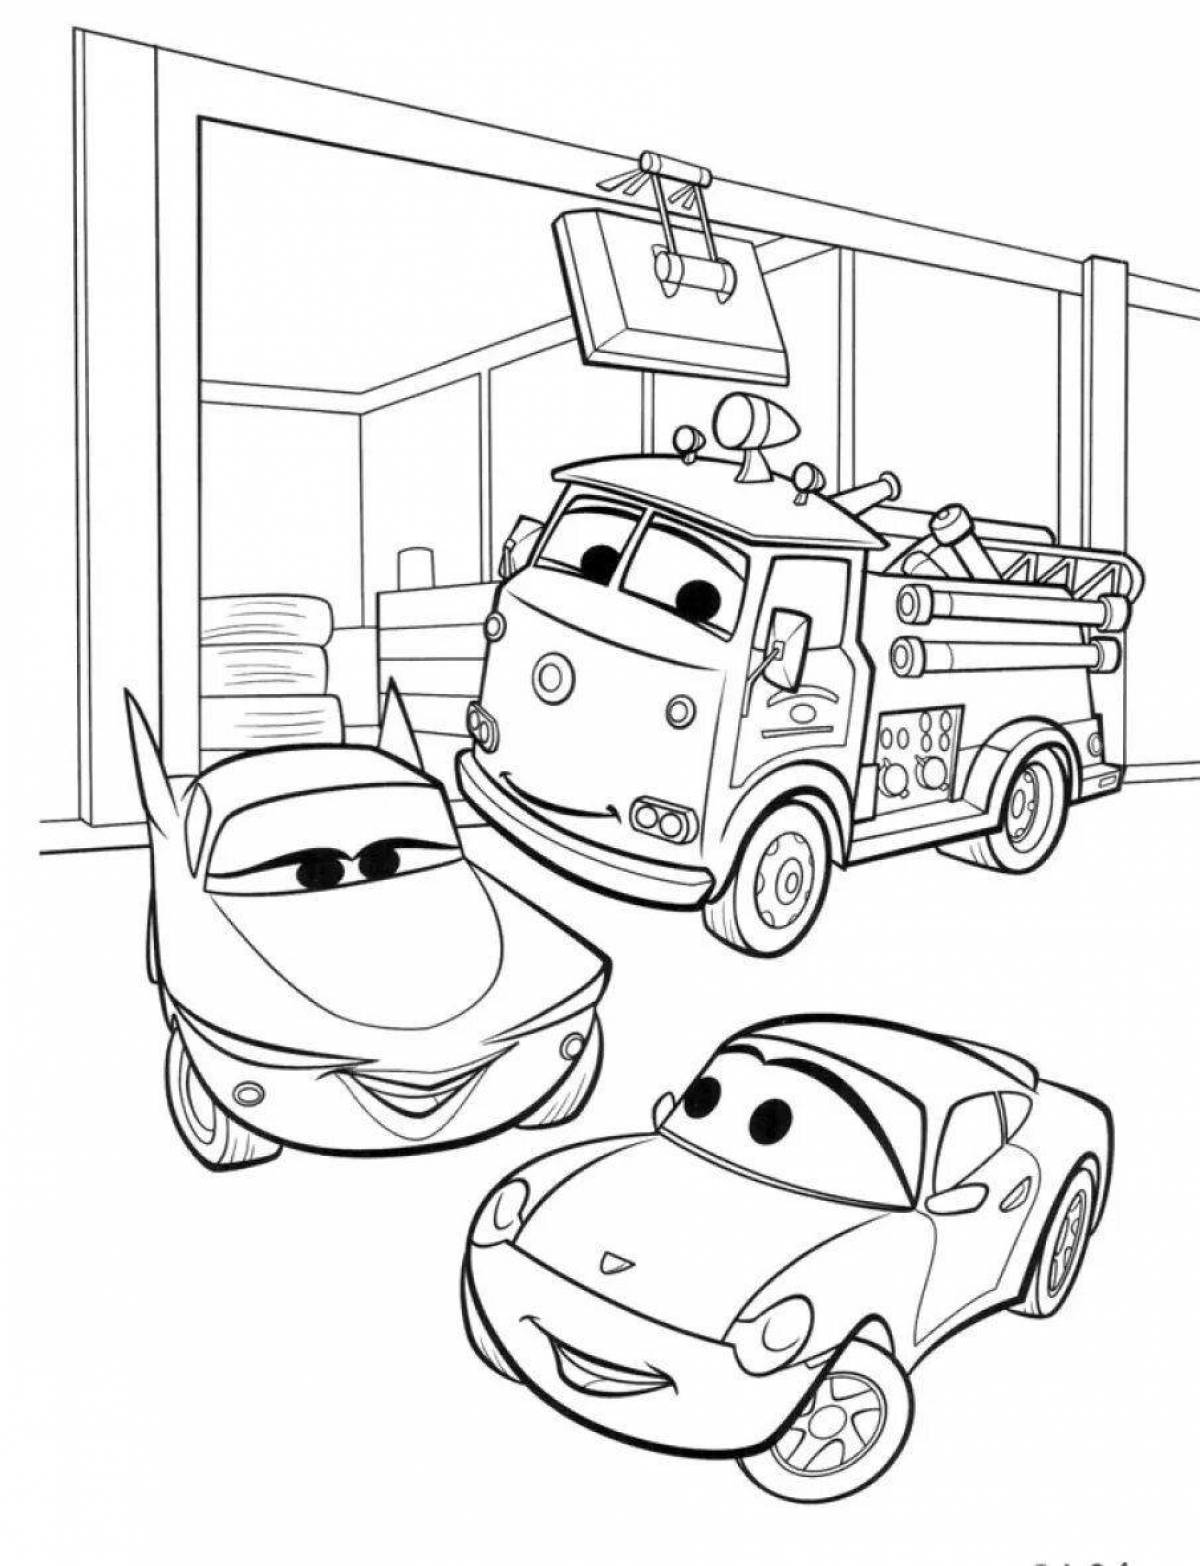 Auto Patrol comic coloring page